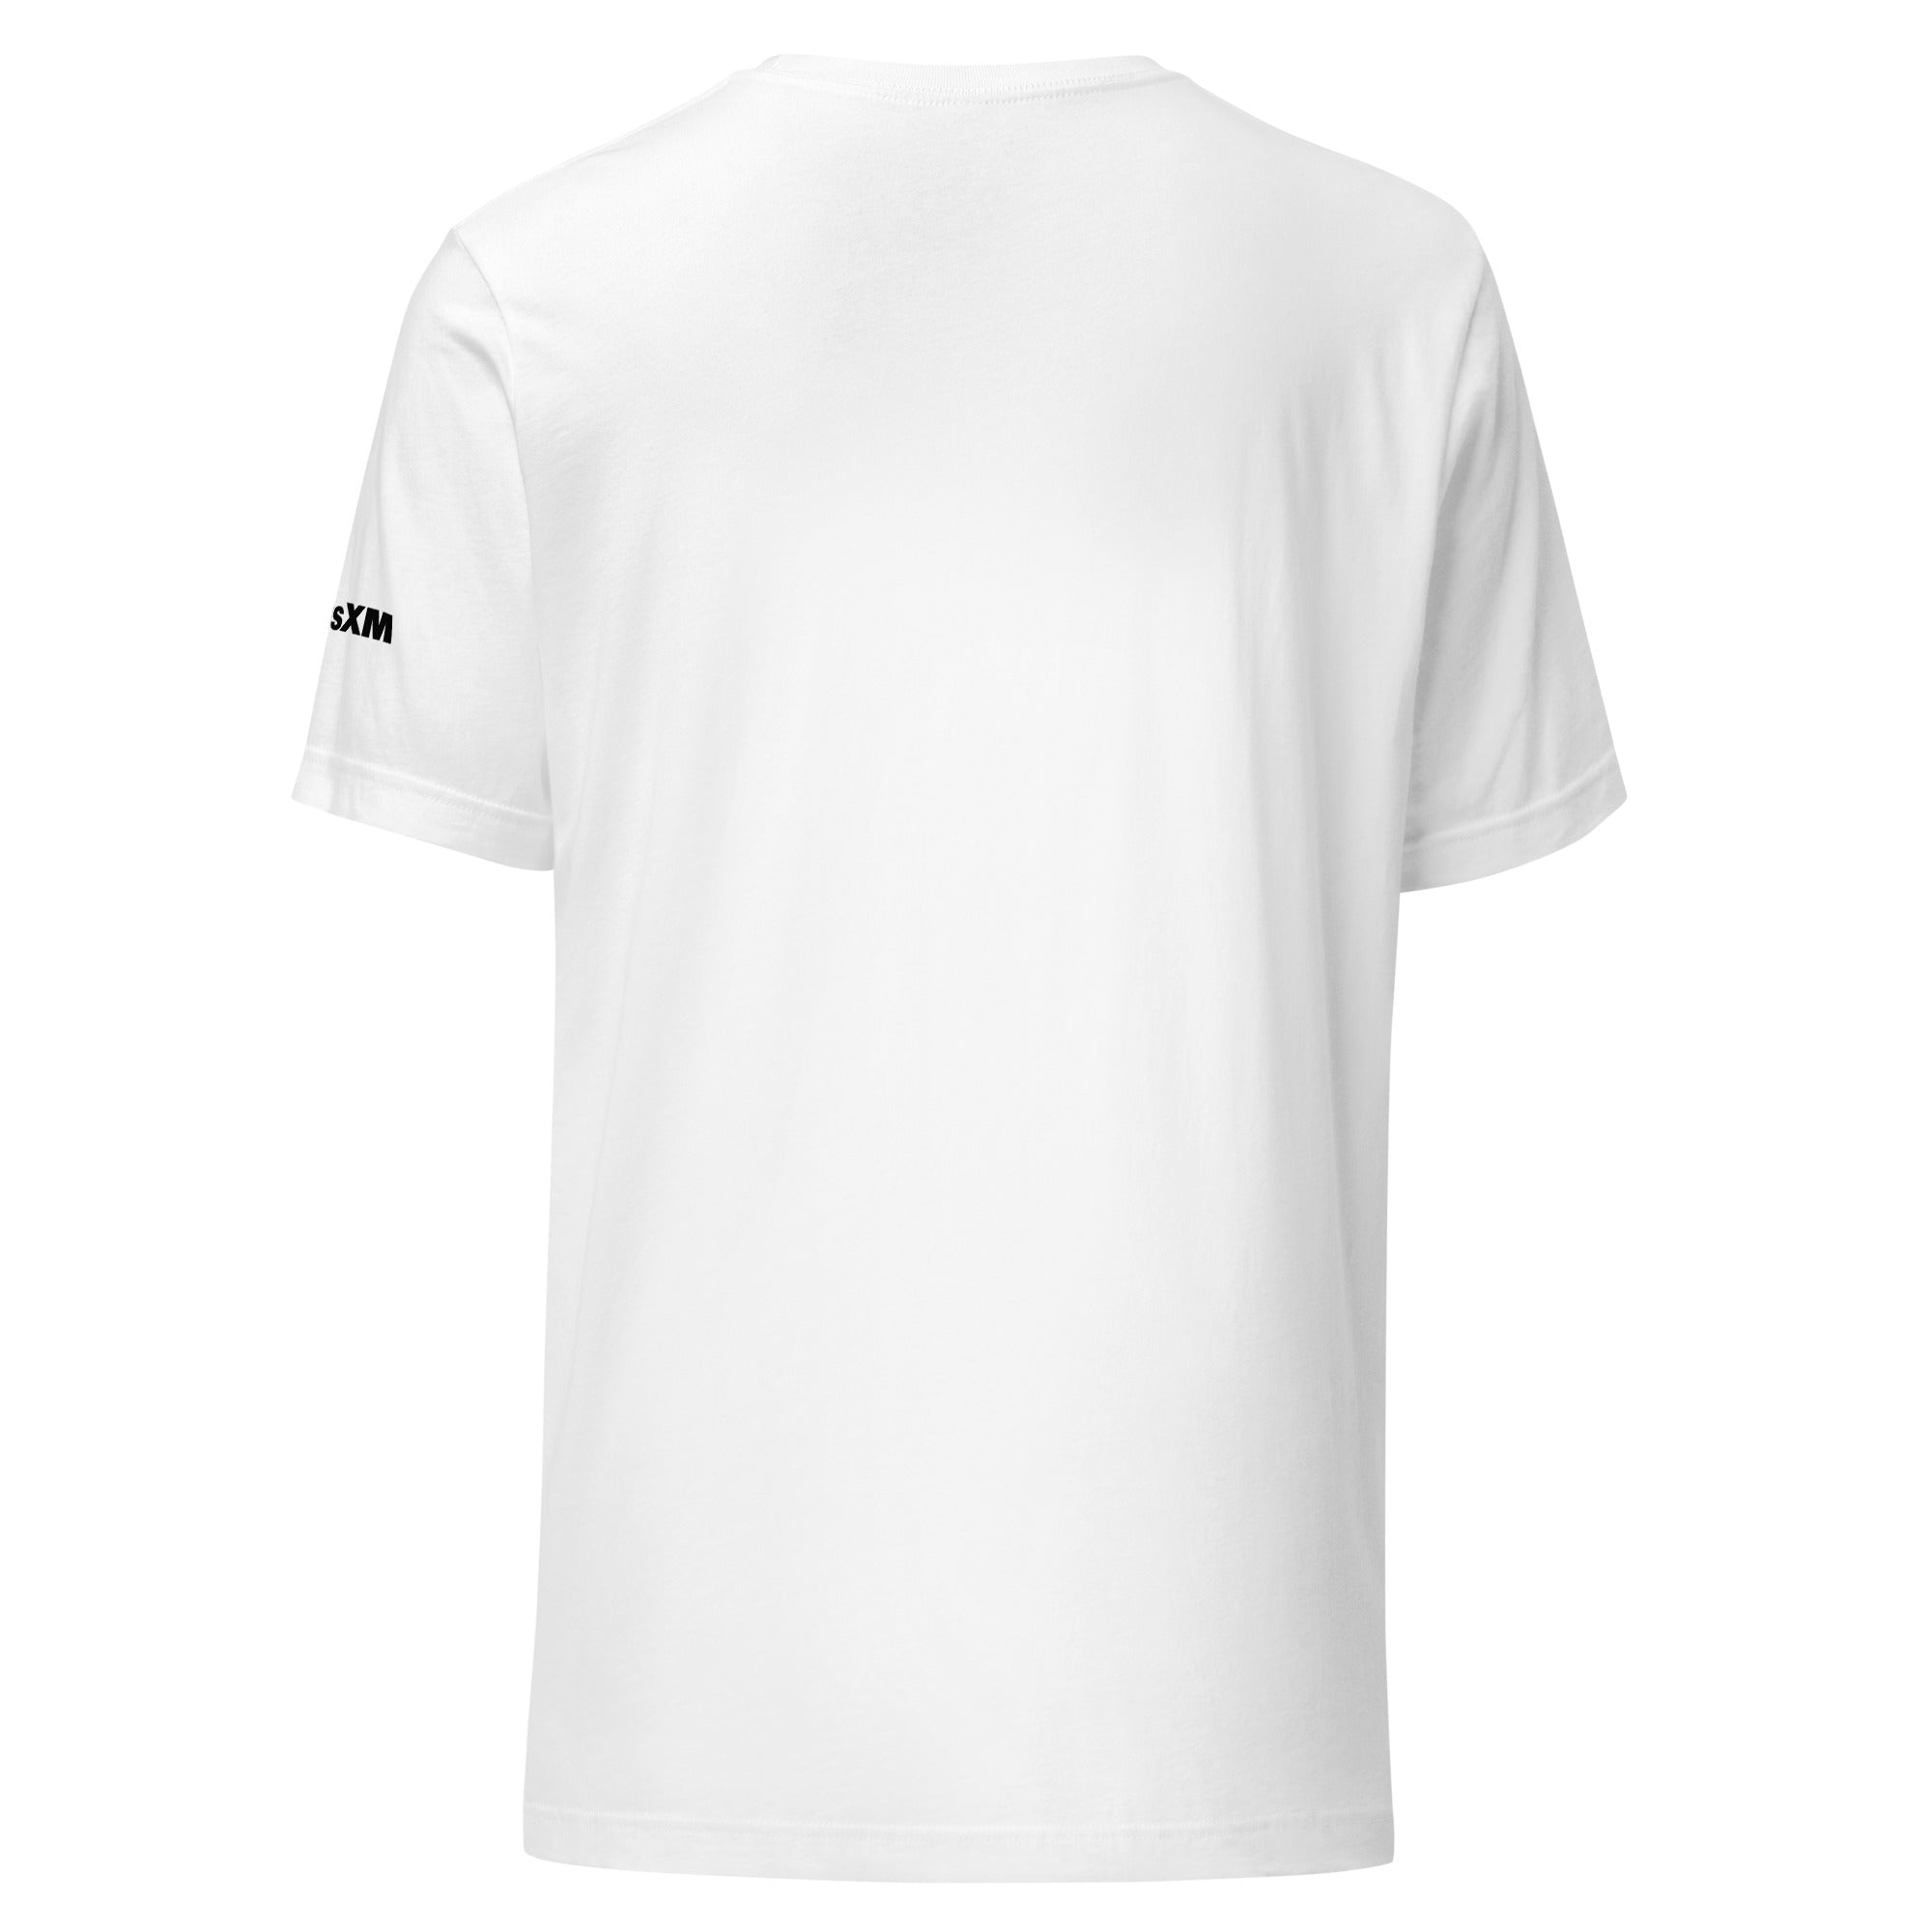 Classic Rewind: T-shirt (White)